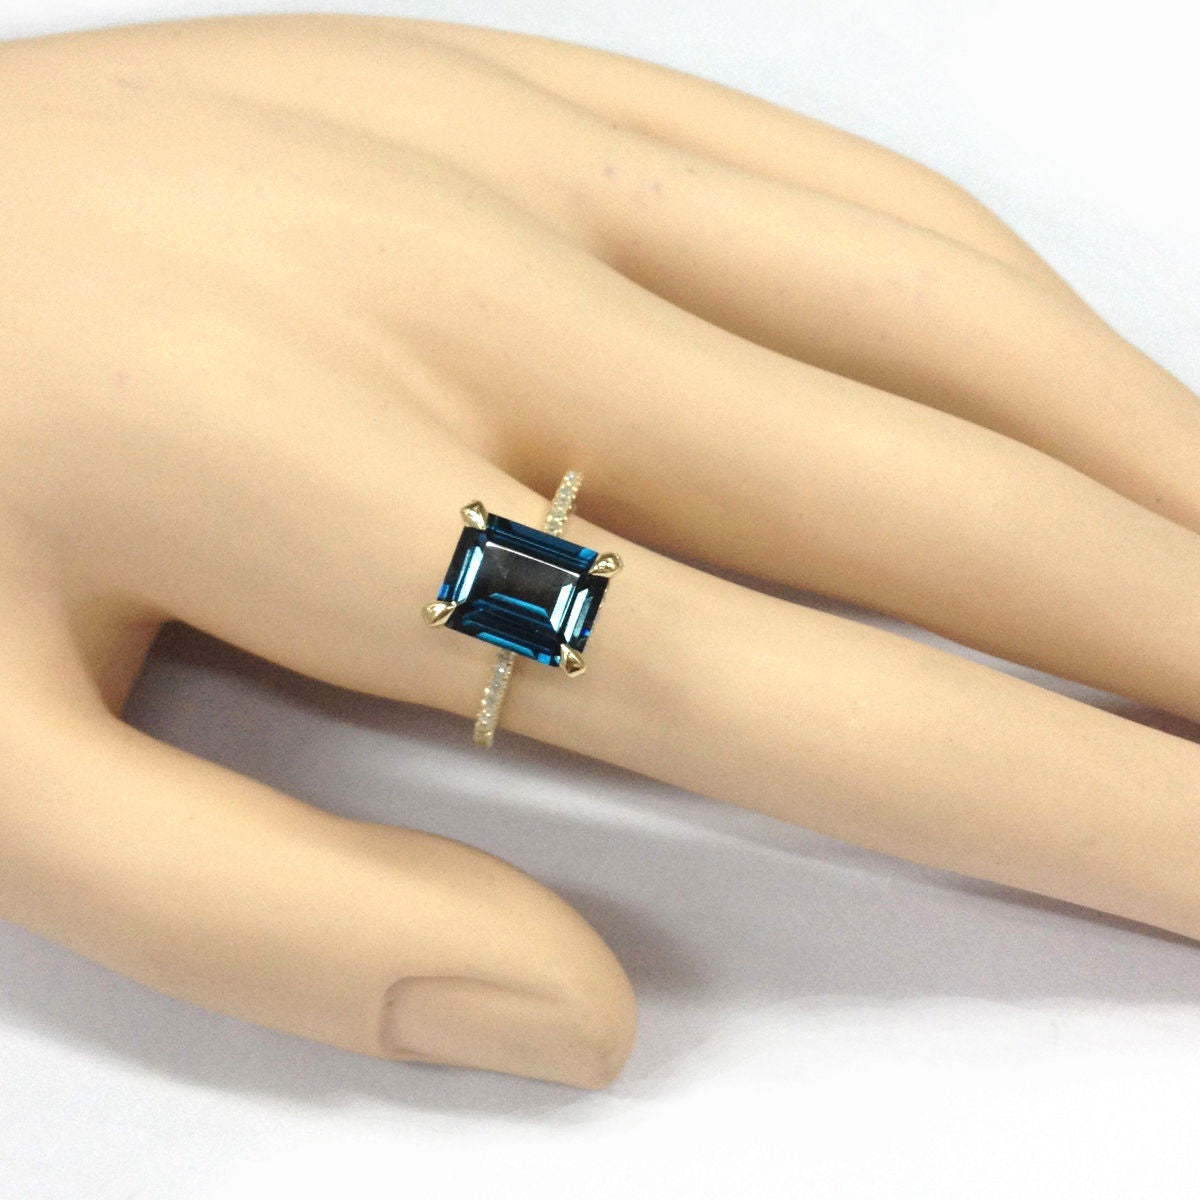 Emerald Cut London Blue Topaz Engagement Ring Pave Diamond Wedding 14K Yellow Gold 8x10mm - Lord of Gem Rings - 5